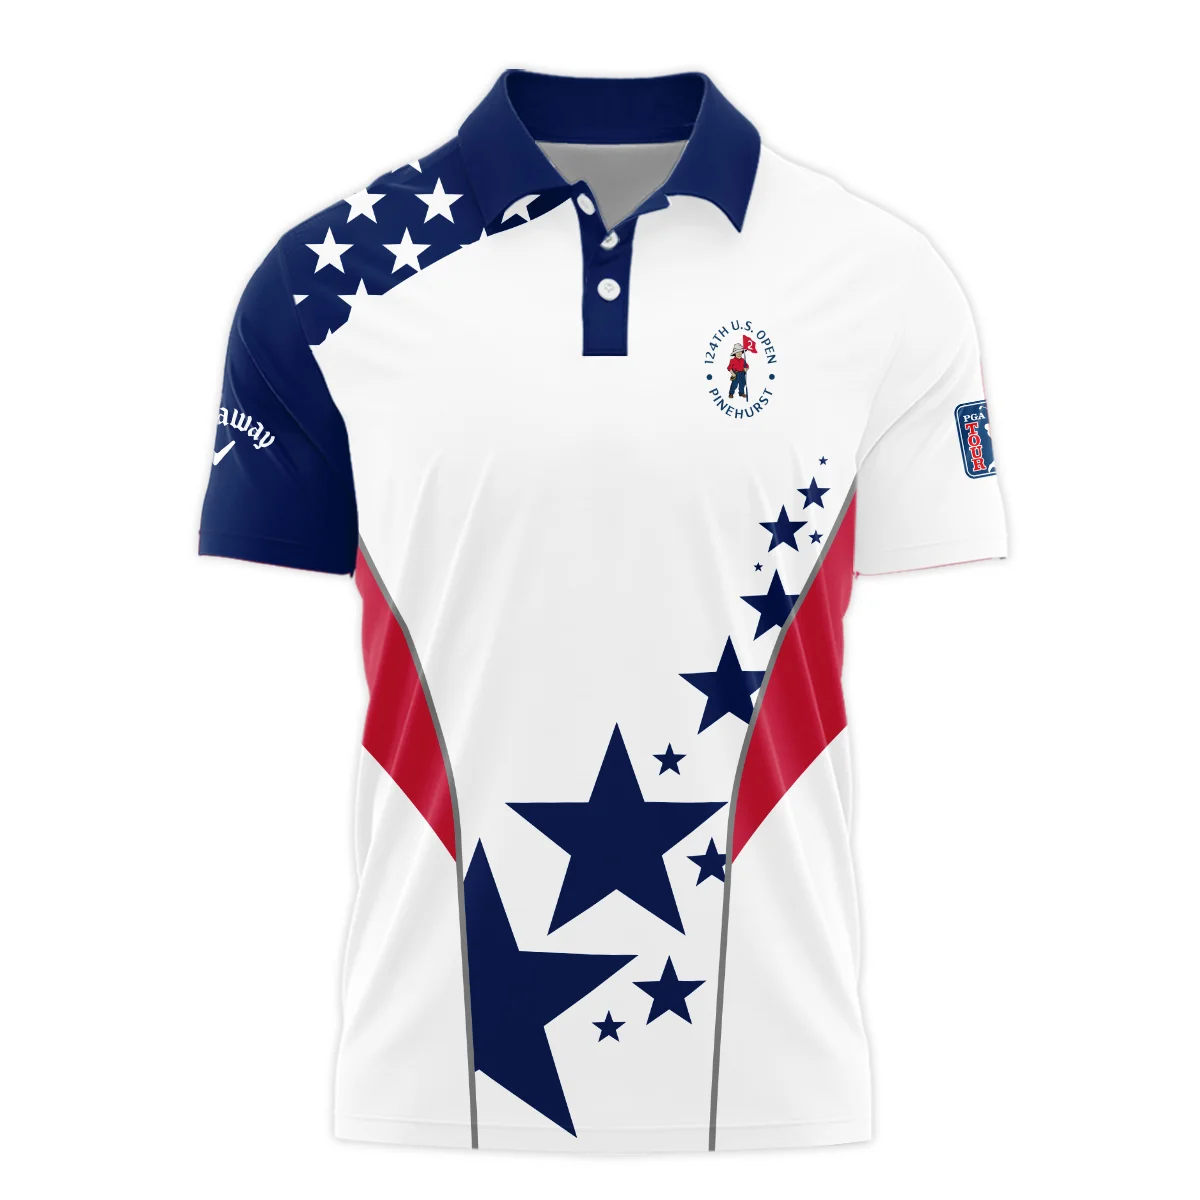 124th U.S. Open Pinehurst Callaway Stars US Flag White Blue Quarter-Zip Jacket Style Classic Quarter-Zip Jacket